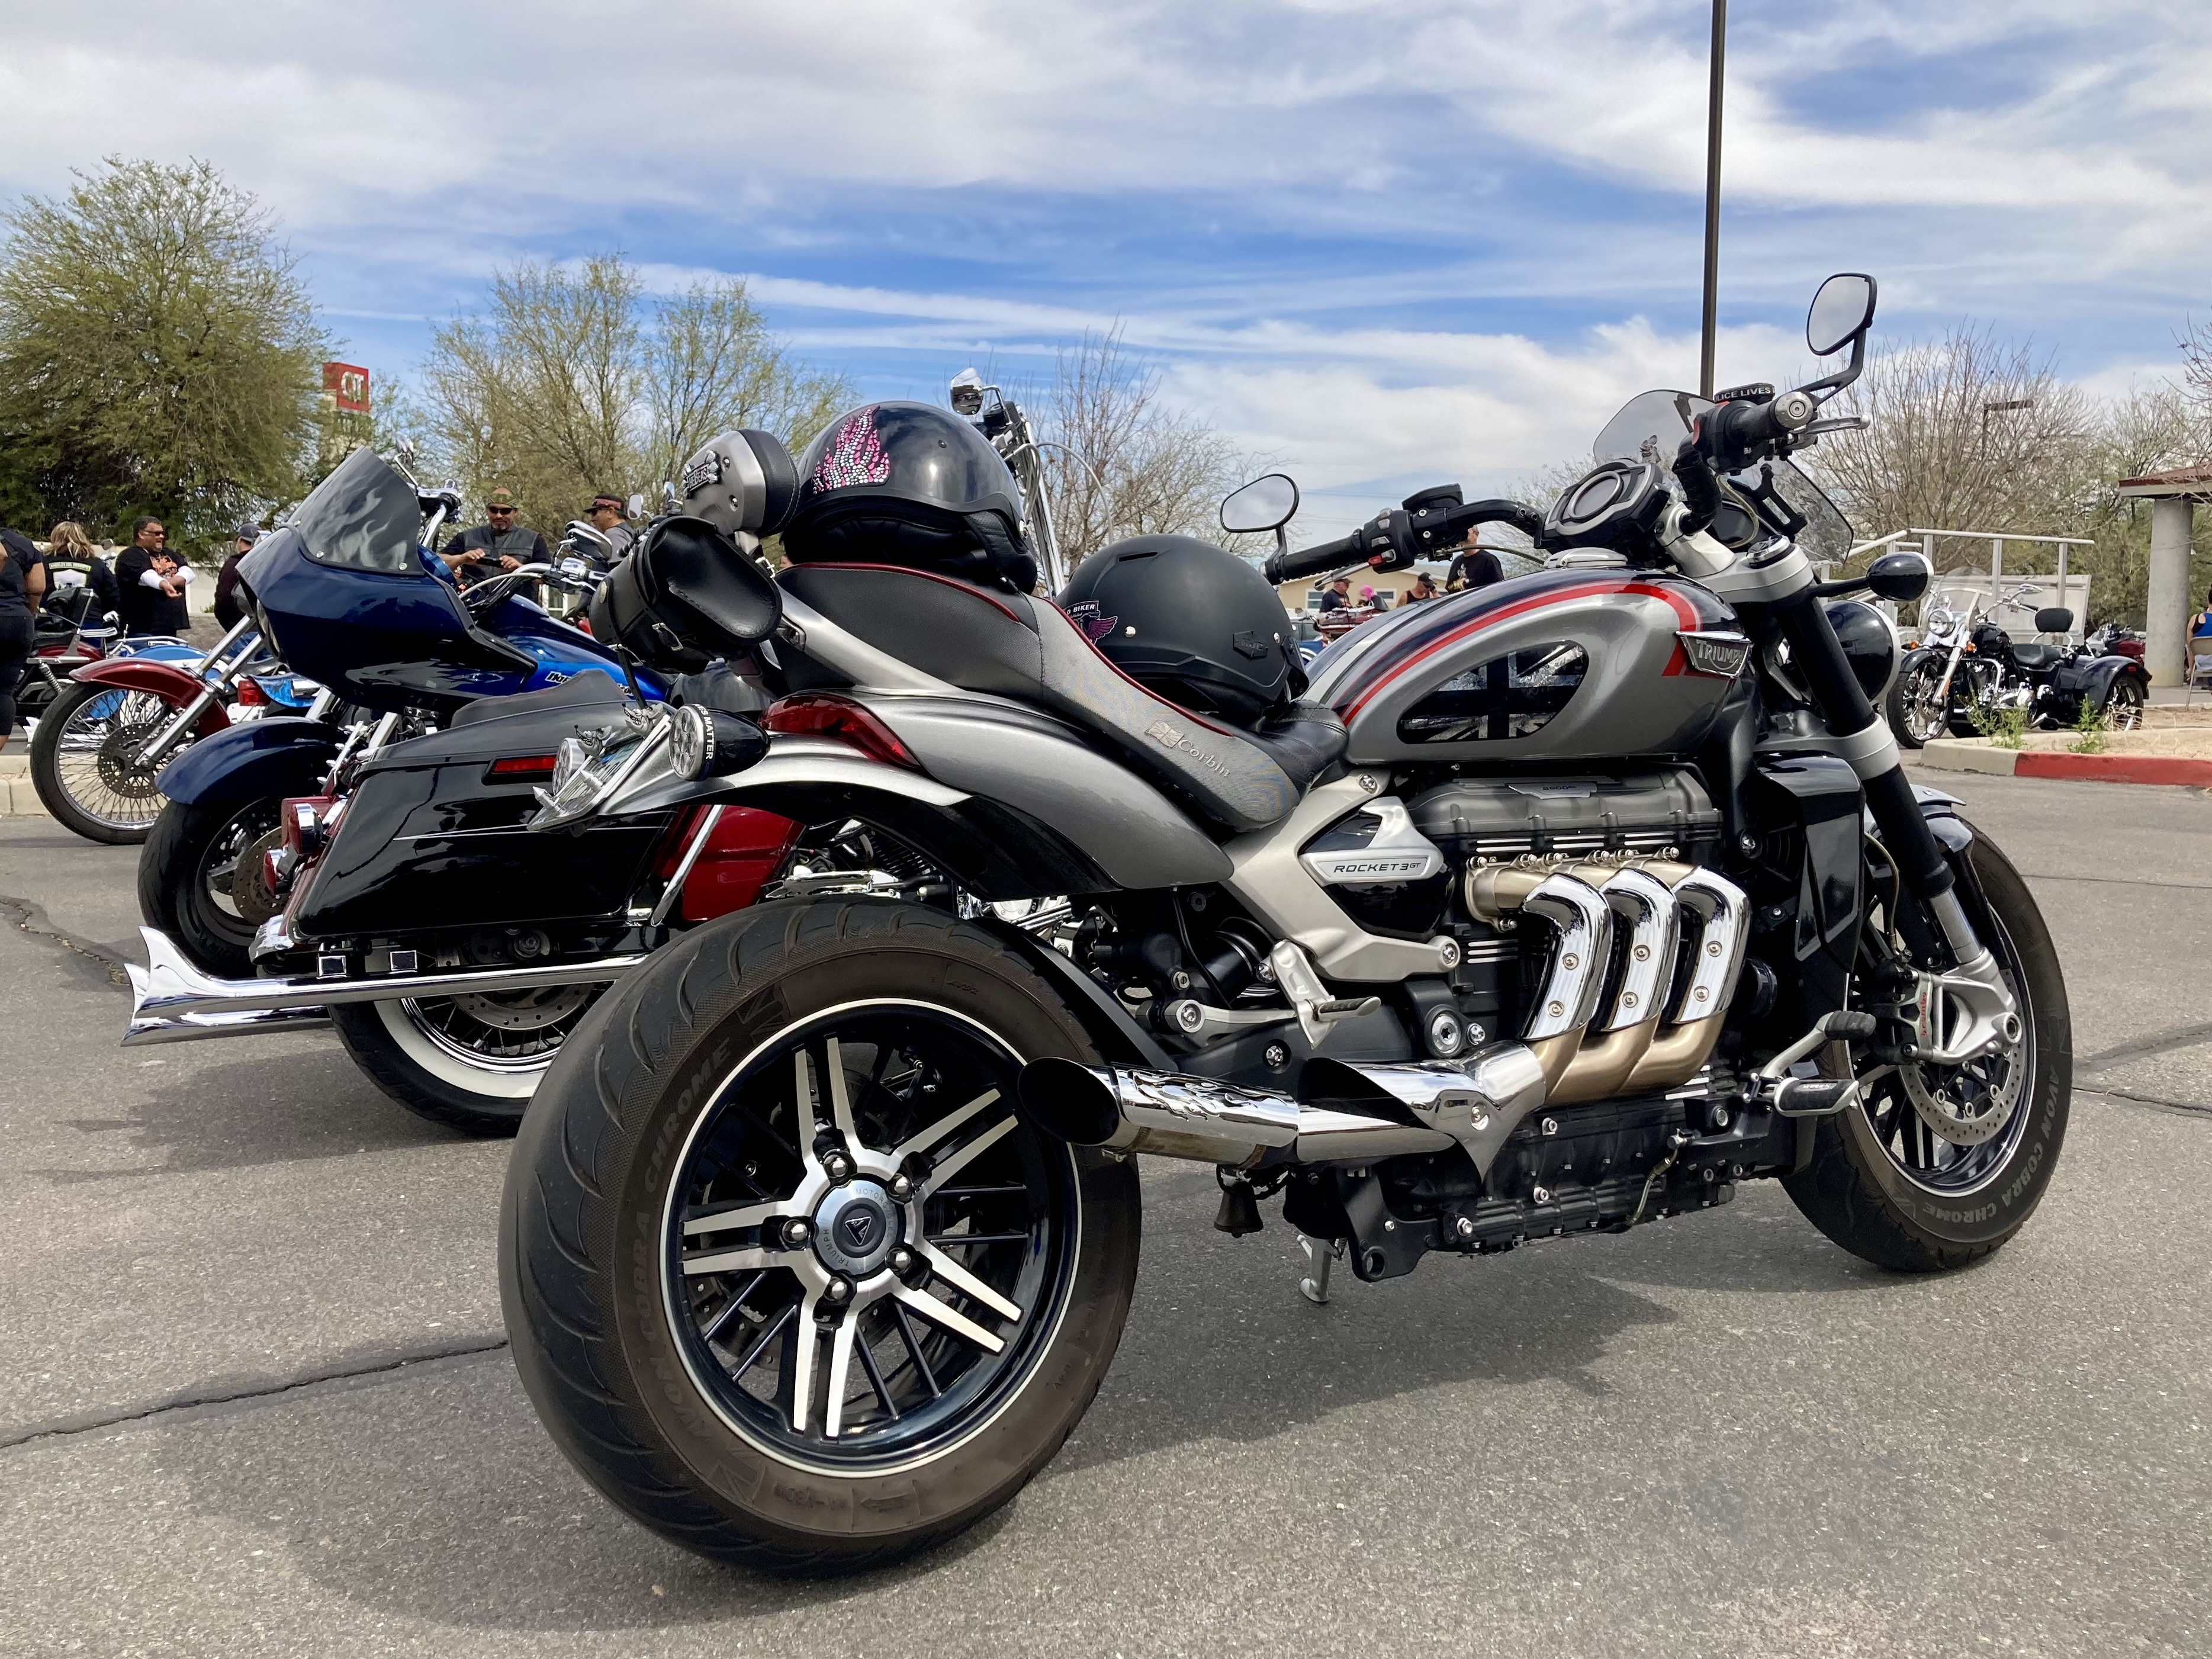 Eye Candy For Motorheads: Tucson H - D Annual Car & Bike Show